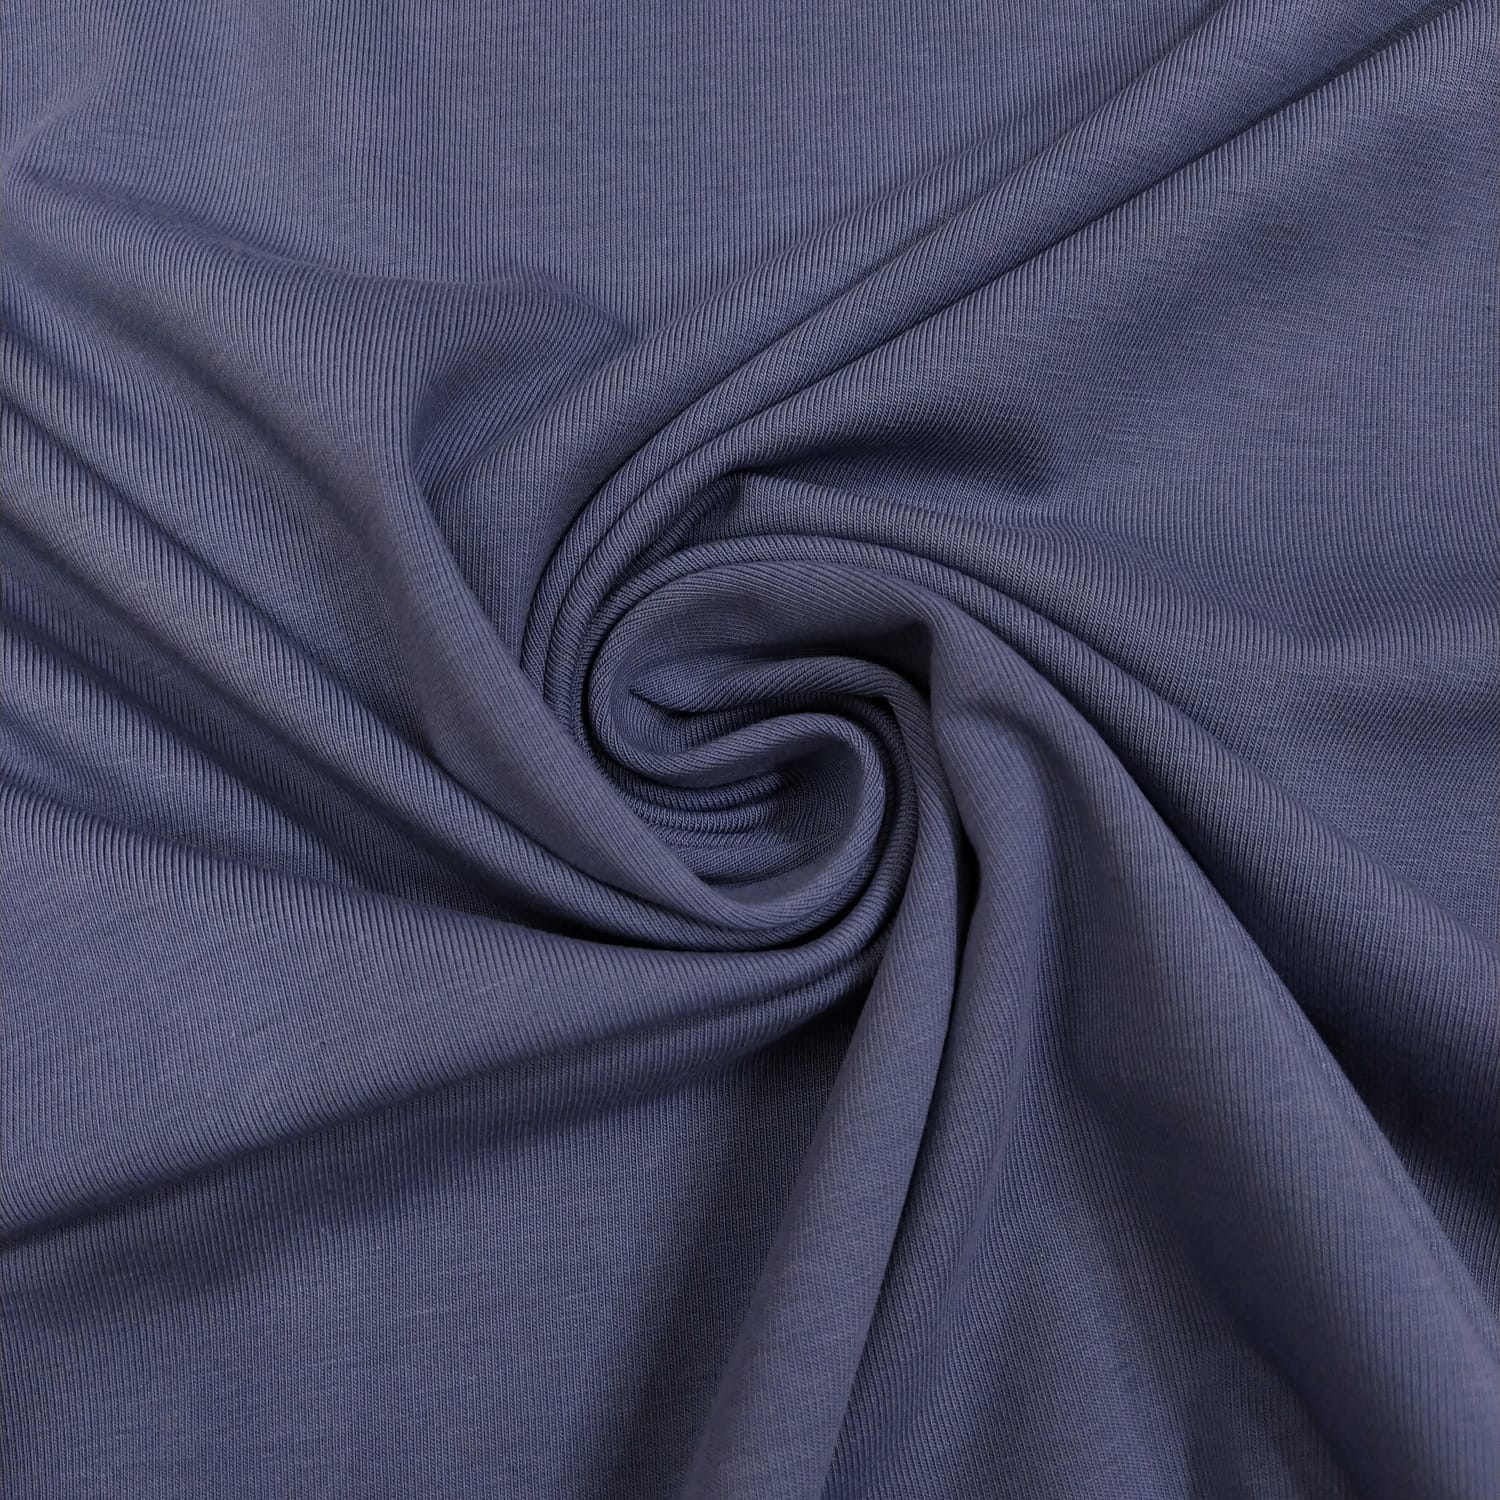 Tessuti tradizionali giapponesi blu blu indaco indaco Japan Blue cotone 50  cm x 110 cm 19,90 Eur/metro tessuto di cotone al metro -  Italia